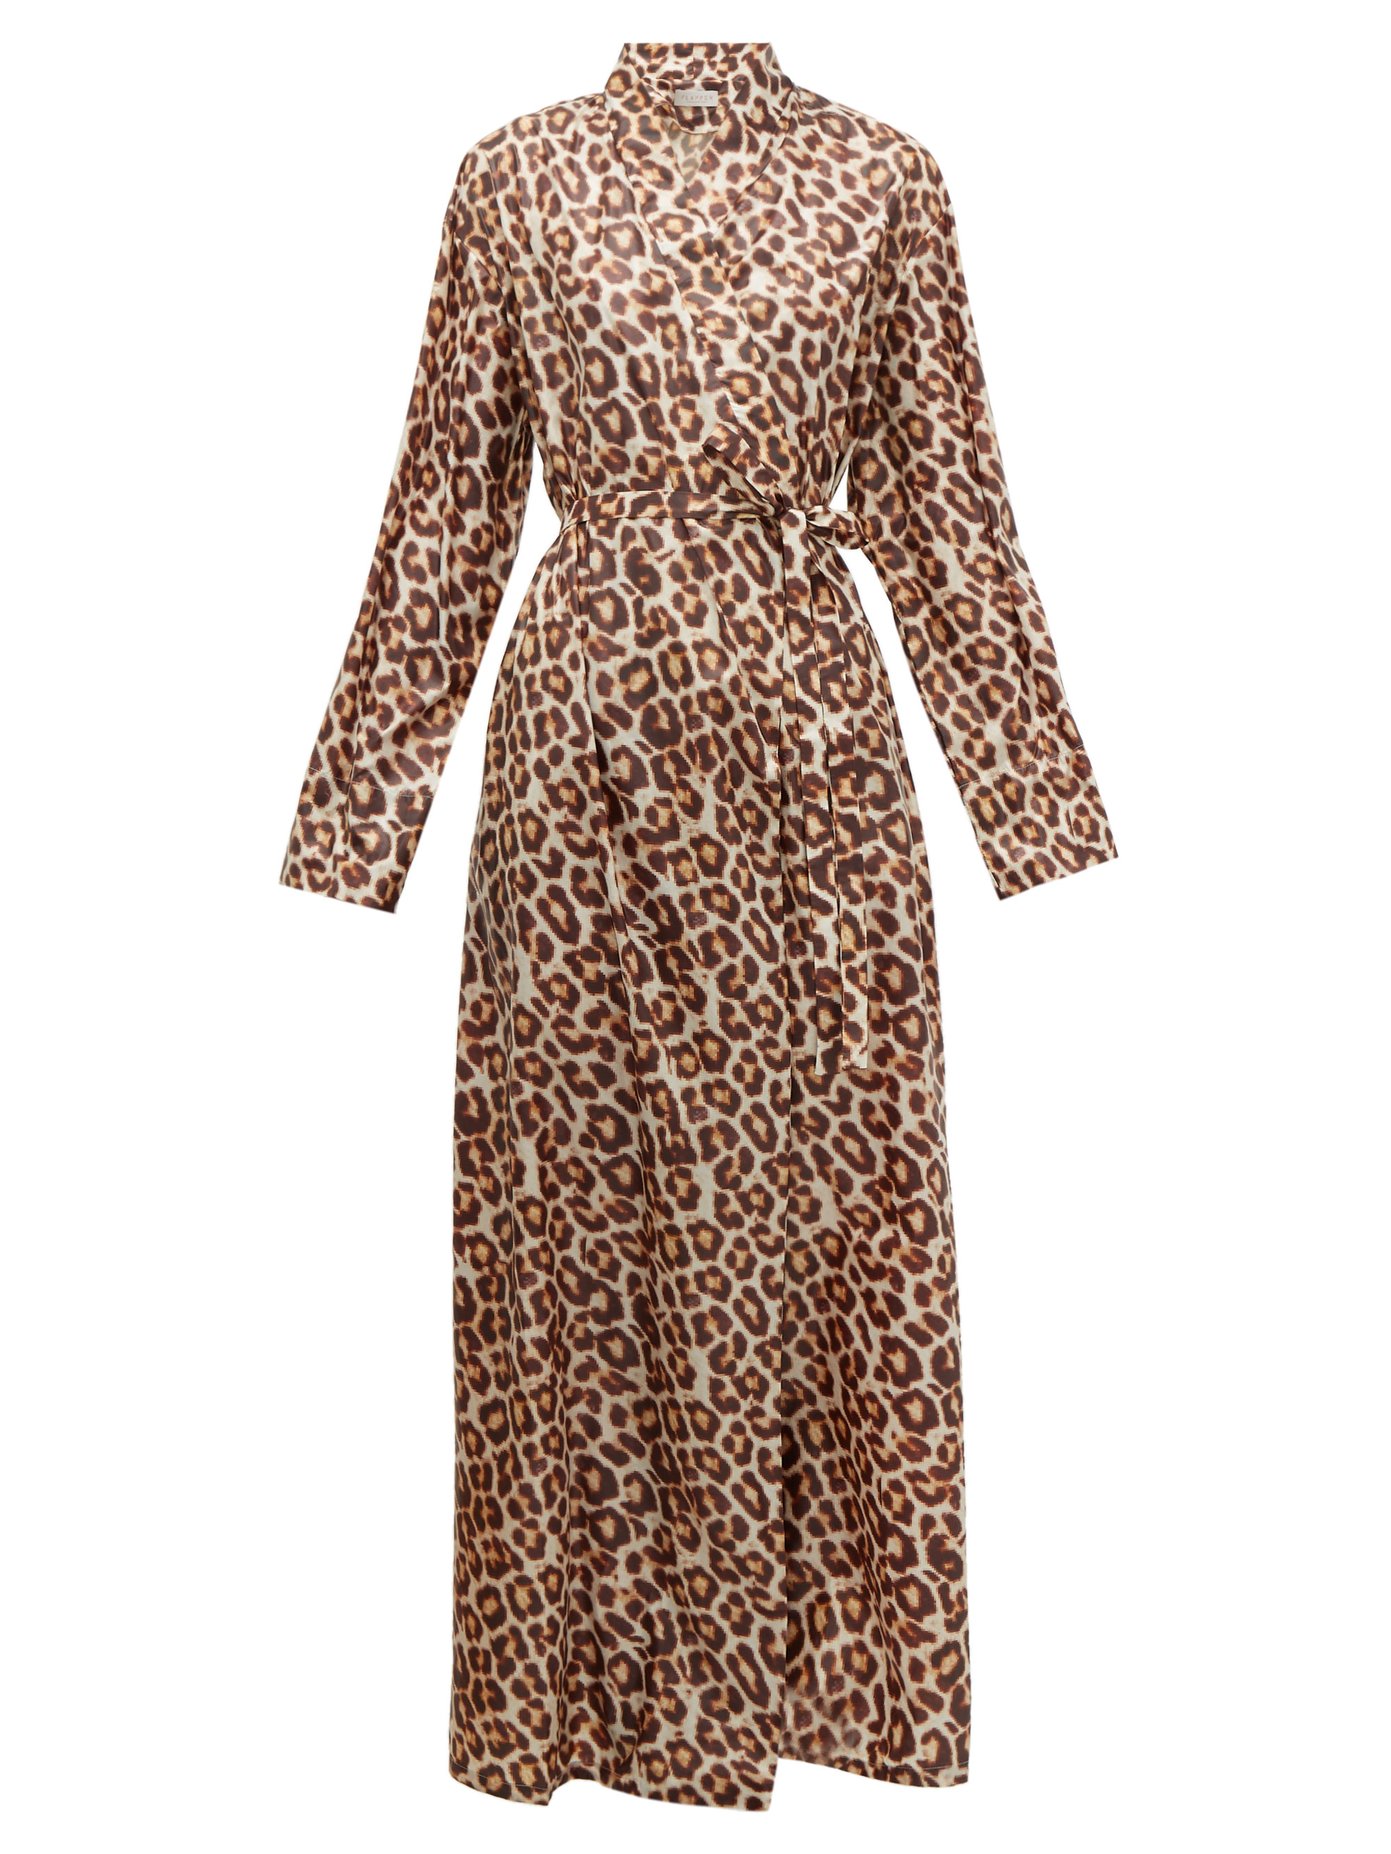 Leopard Print Wrap Dress Uk Hot Sale ...